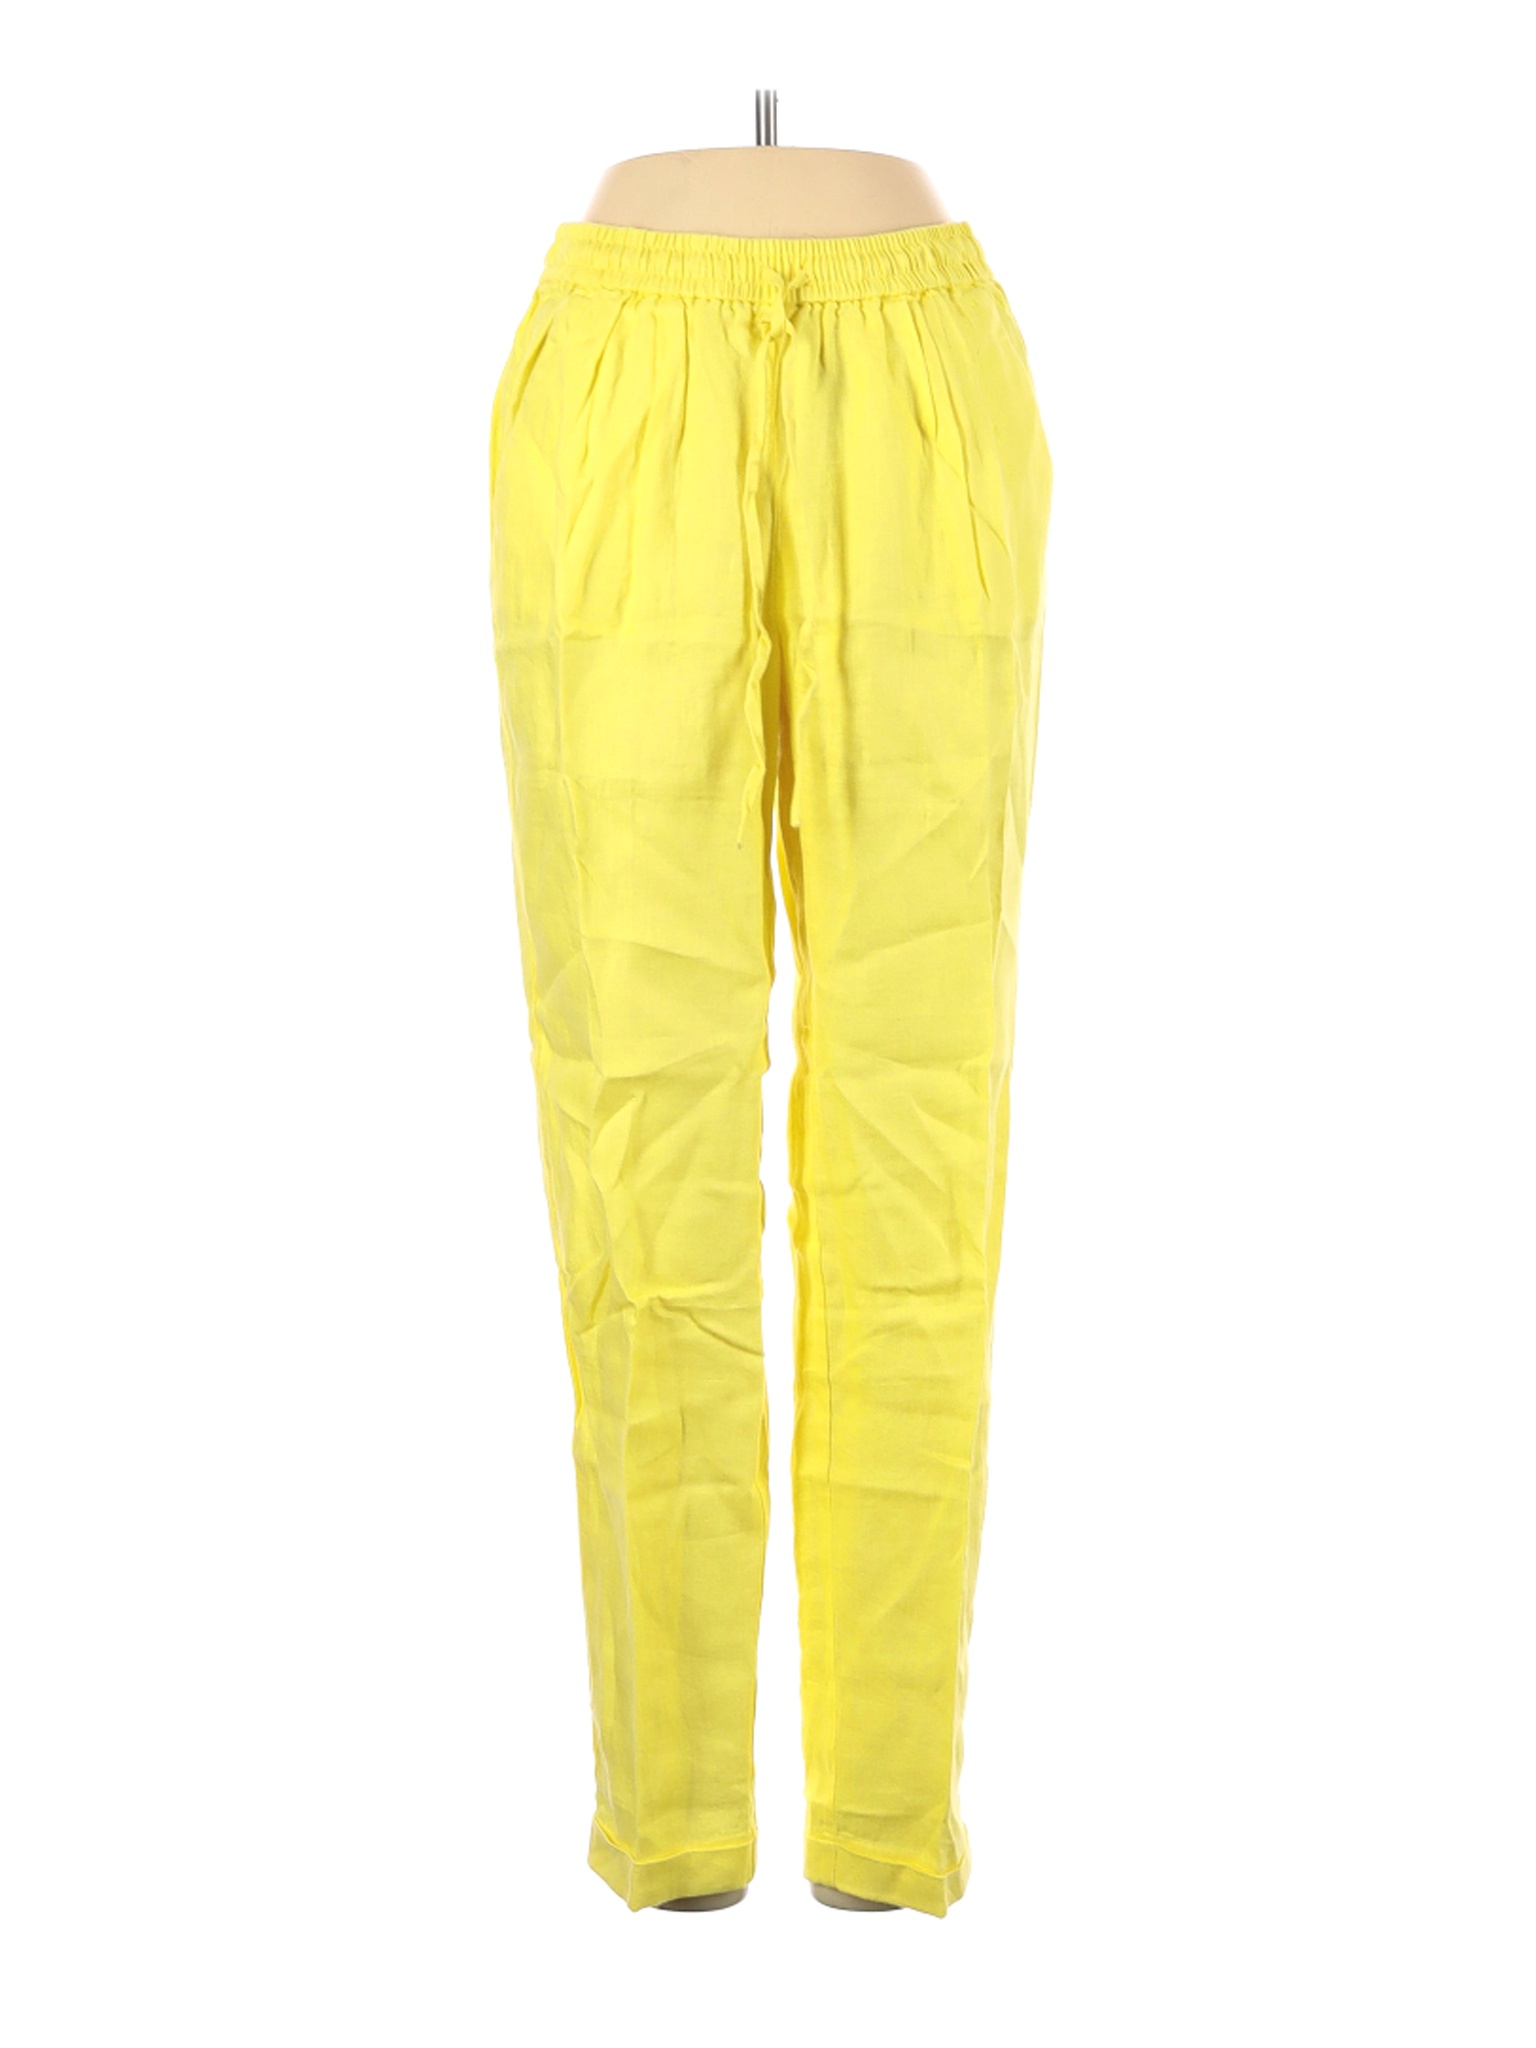 NWT J.Crew Women Yellow Linen Pants 0 | eBay